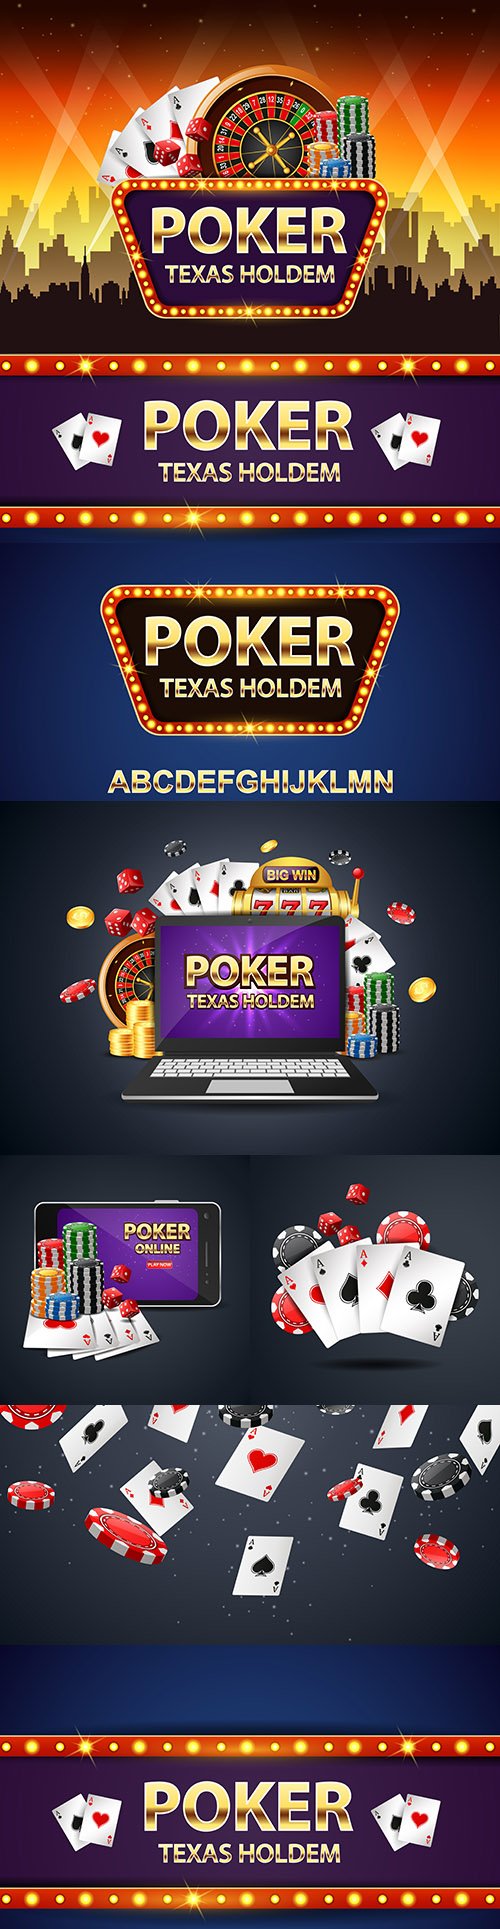 Poker internet casino banner vector illustration